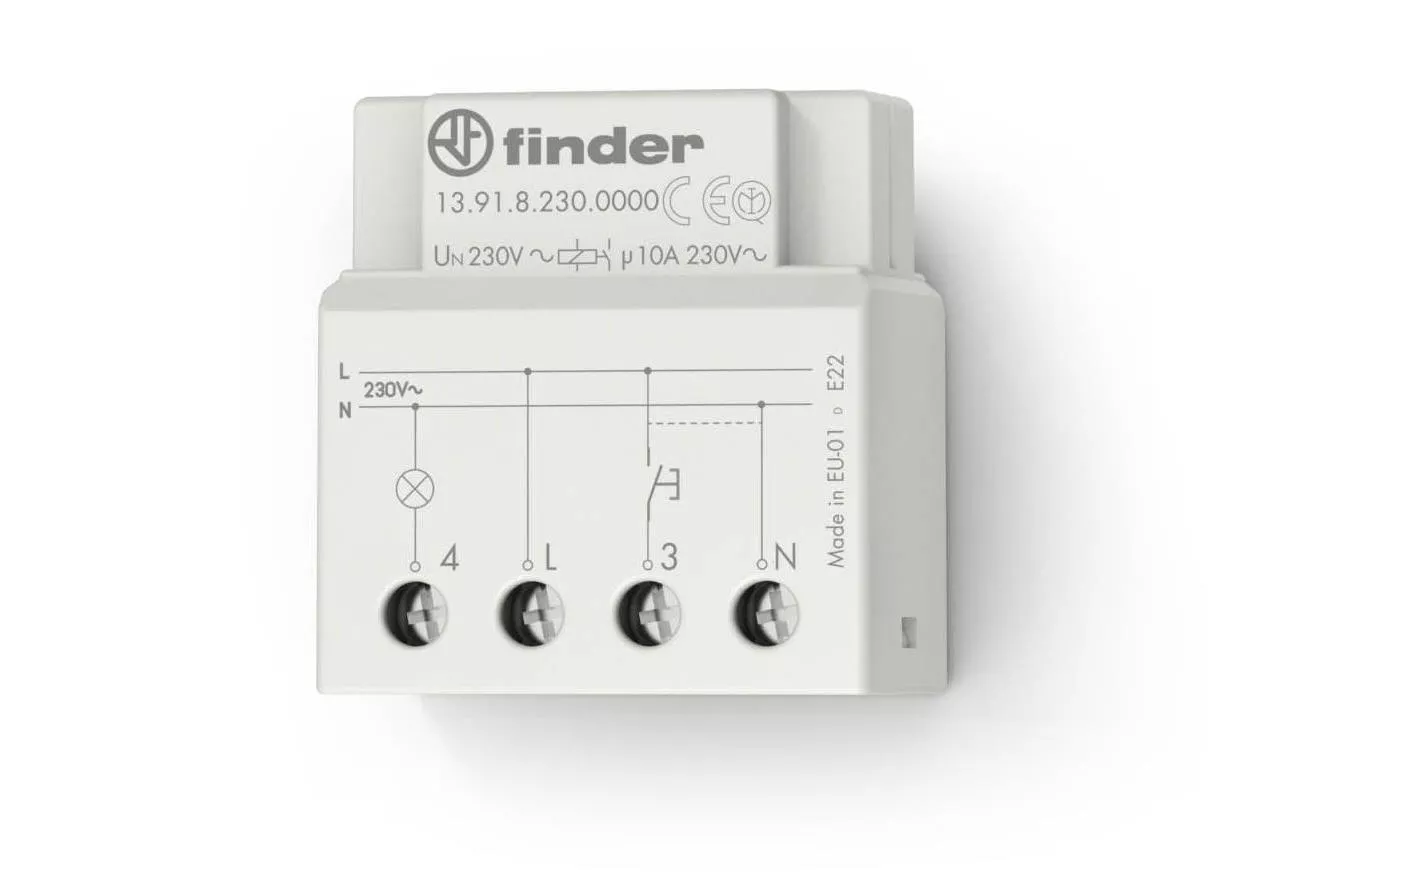 Interruttore a passo elettronico Finder serie 13 10A